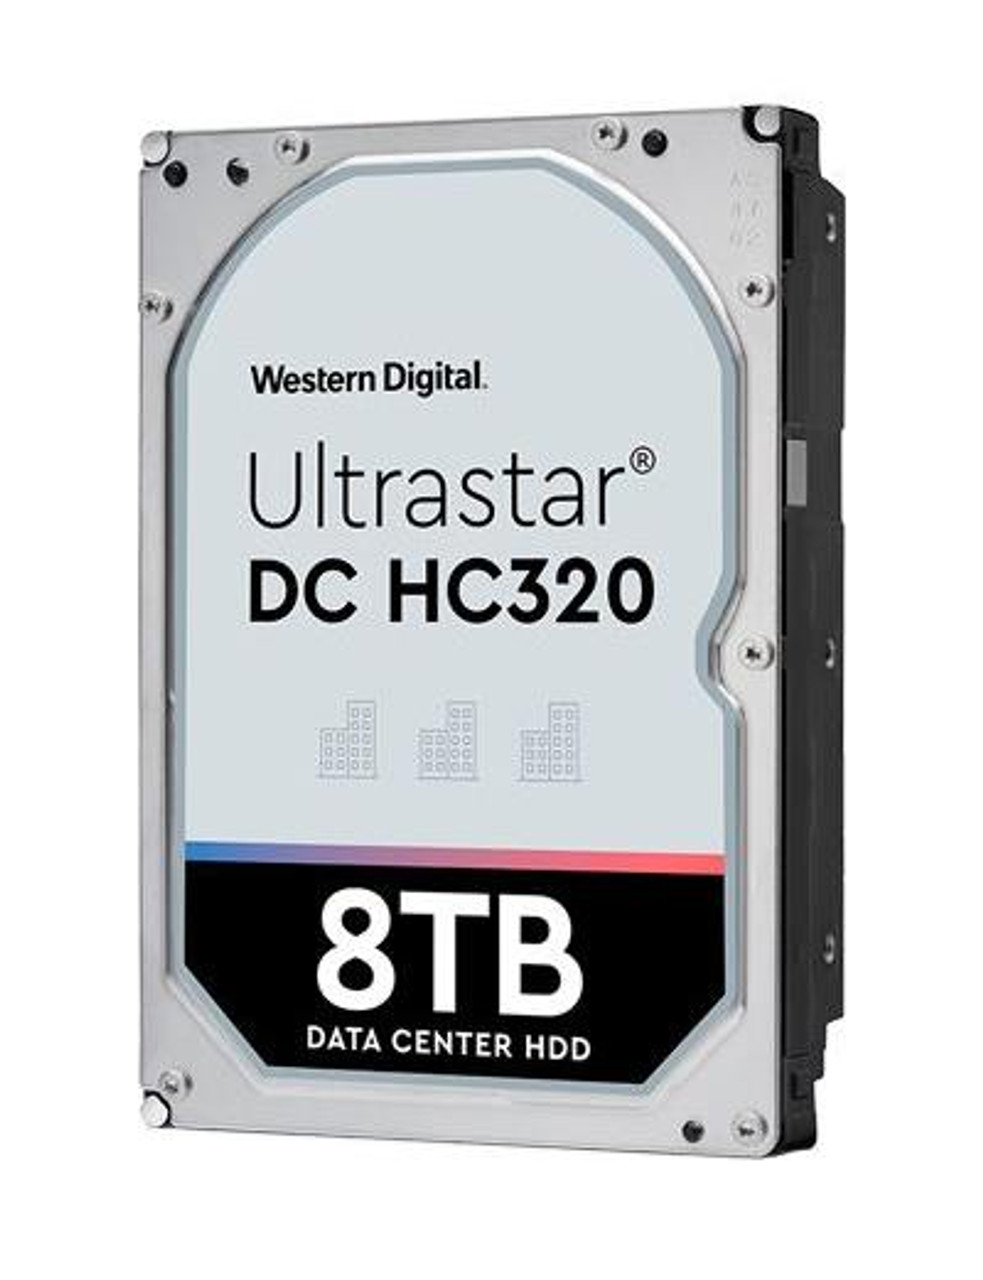 Western Digital Ultrastar Dc Hc320 Series 8TB 7200RPM SATA 6Gbps (512e) Hard Disk Drive